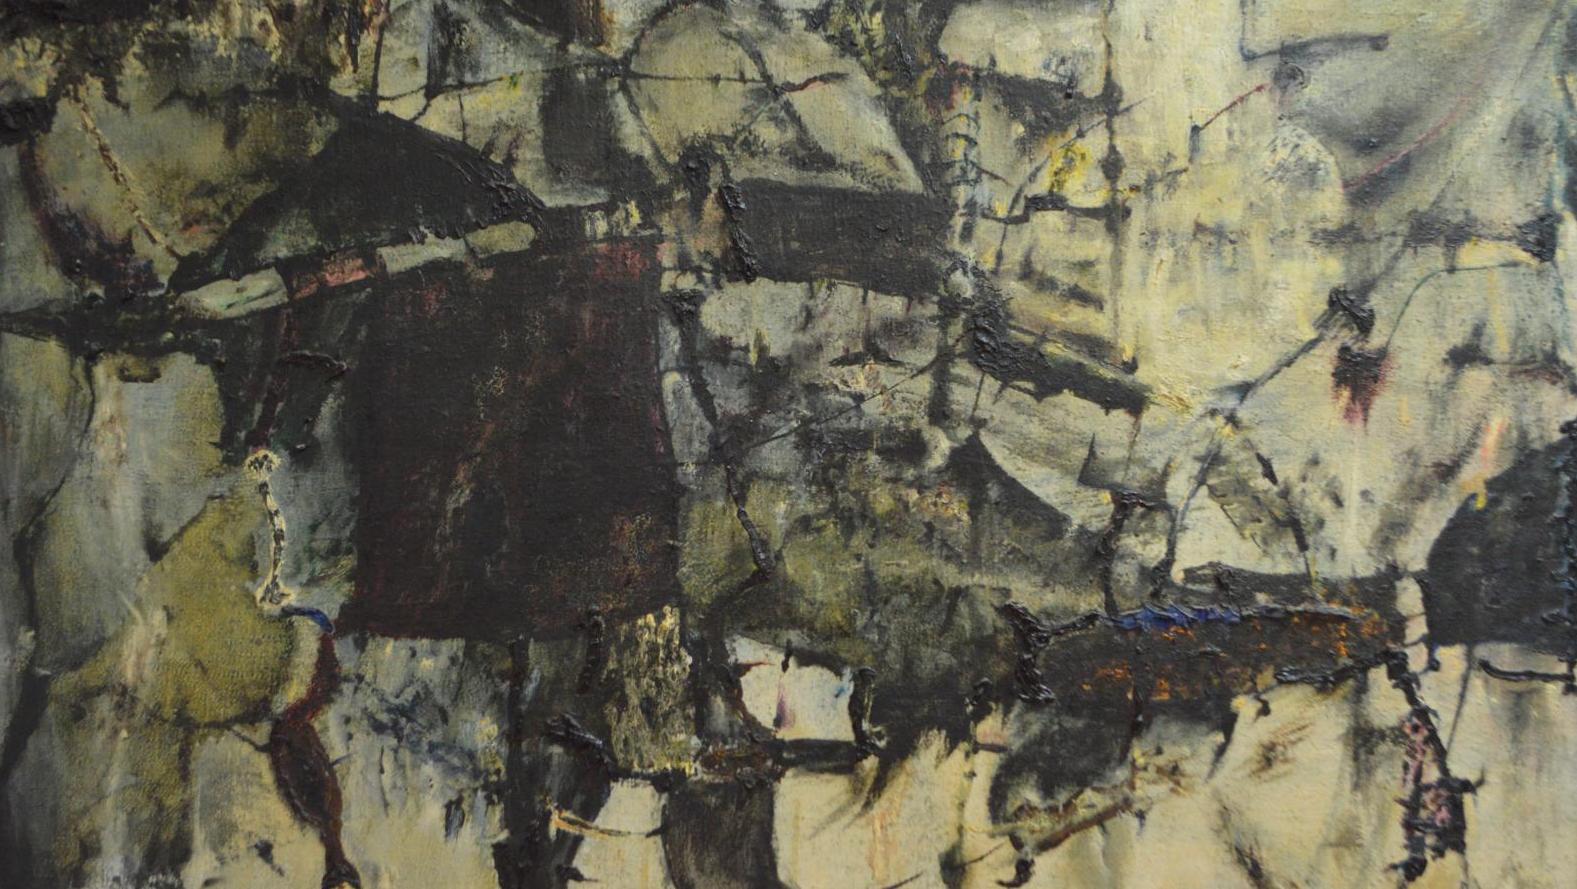 Tadeusz Brzozowski (1918-1983), Podest, 1959, huile sur toile, 80 x 110 cm. Esti... Abstraction polonaise